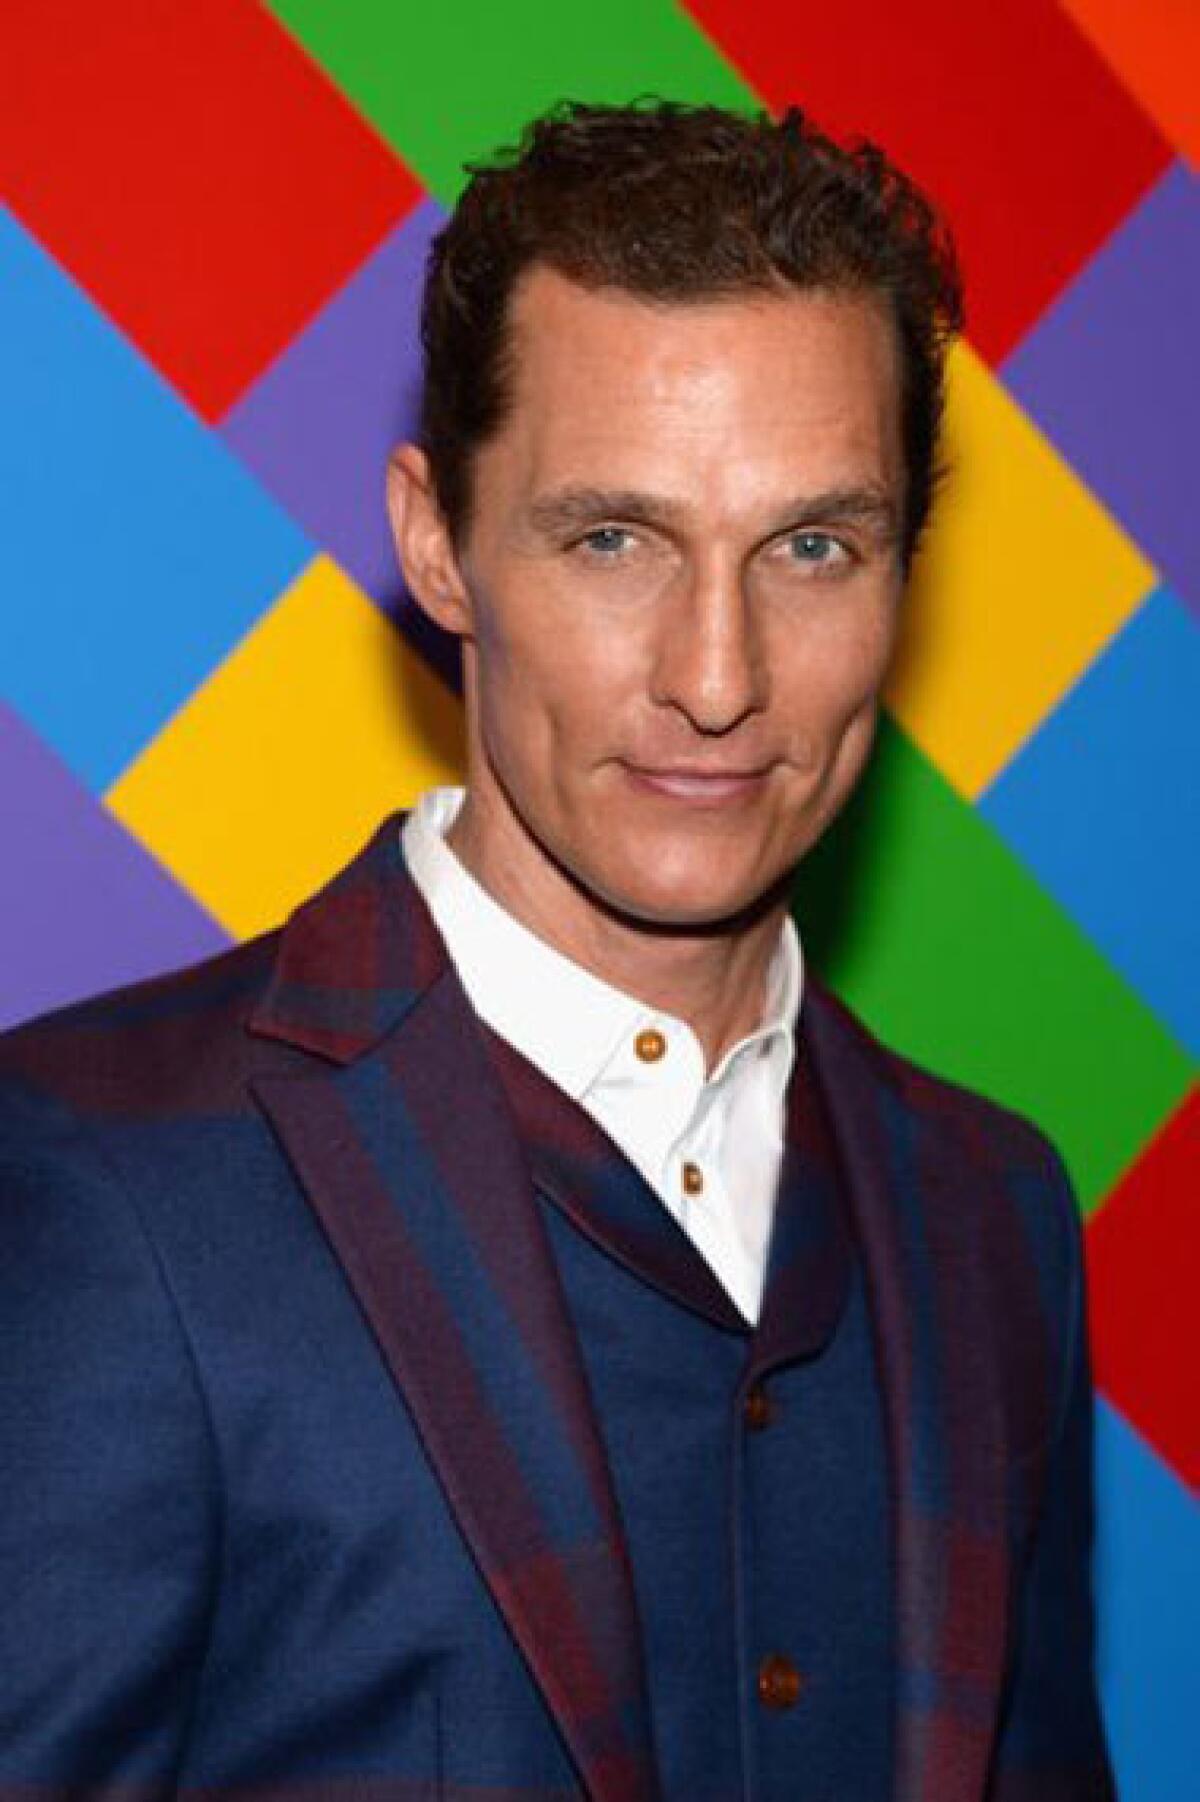 Matthew McConaughey's new clothing line will help benefit school programs.